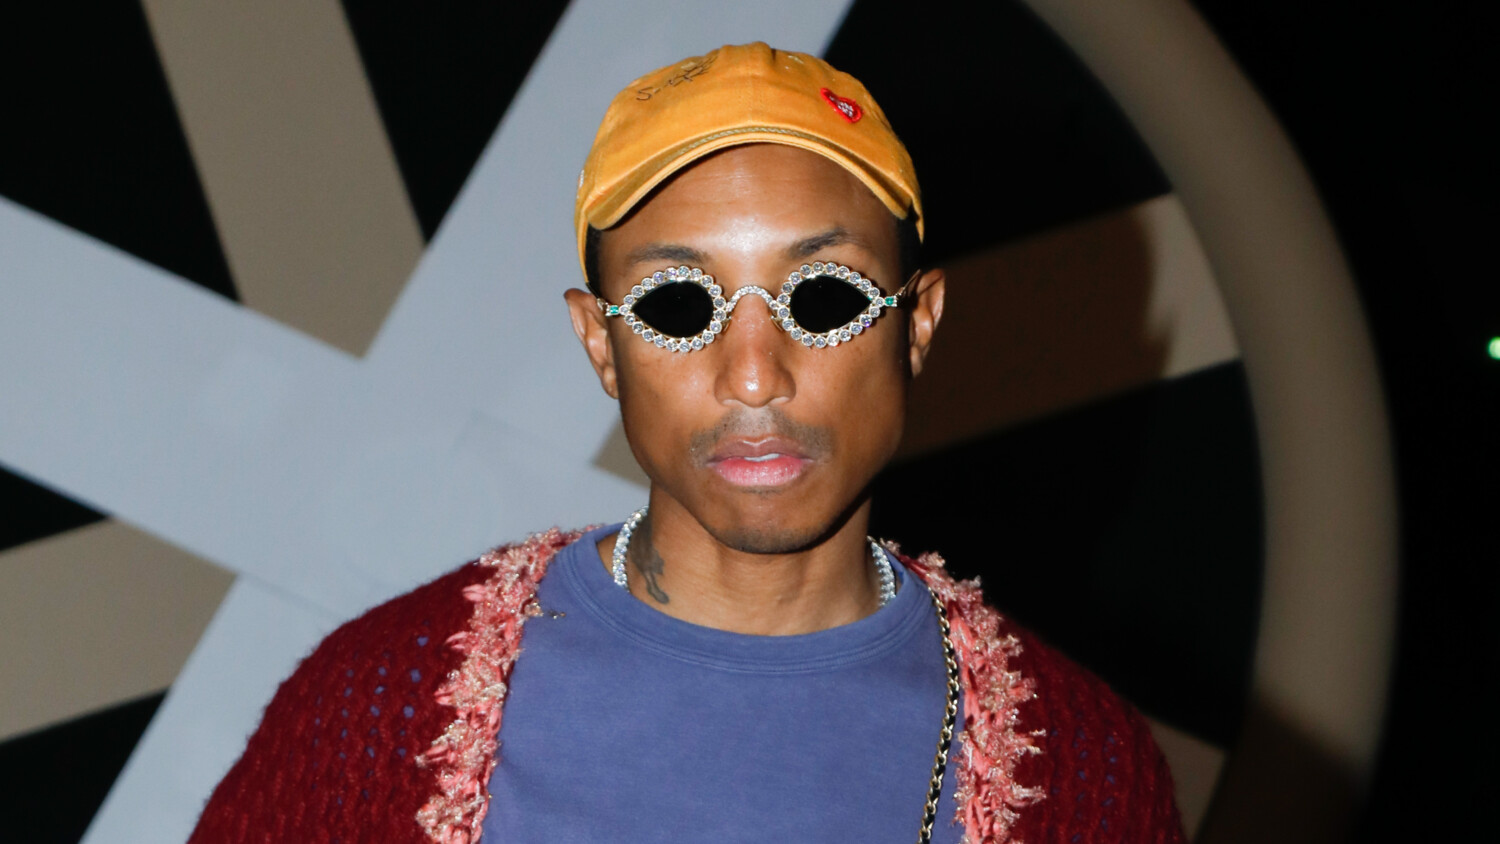 Louis Vuitton: Louis Vuitton's Pharrell Williams new direction